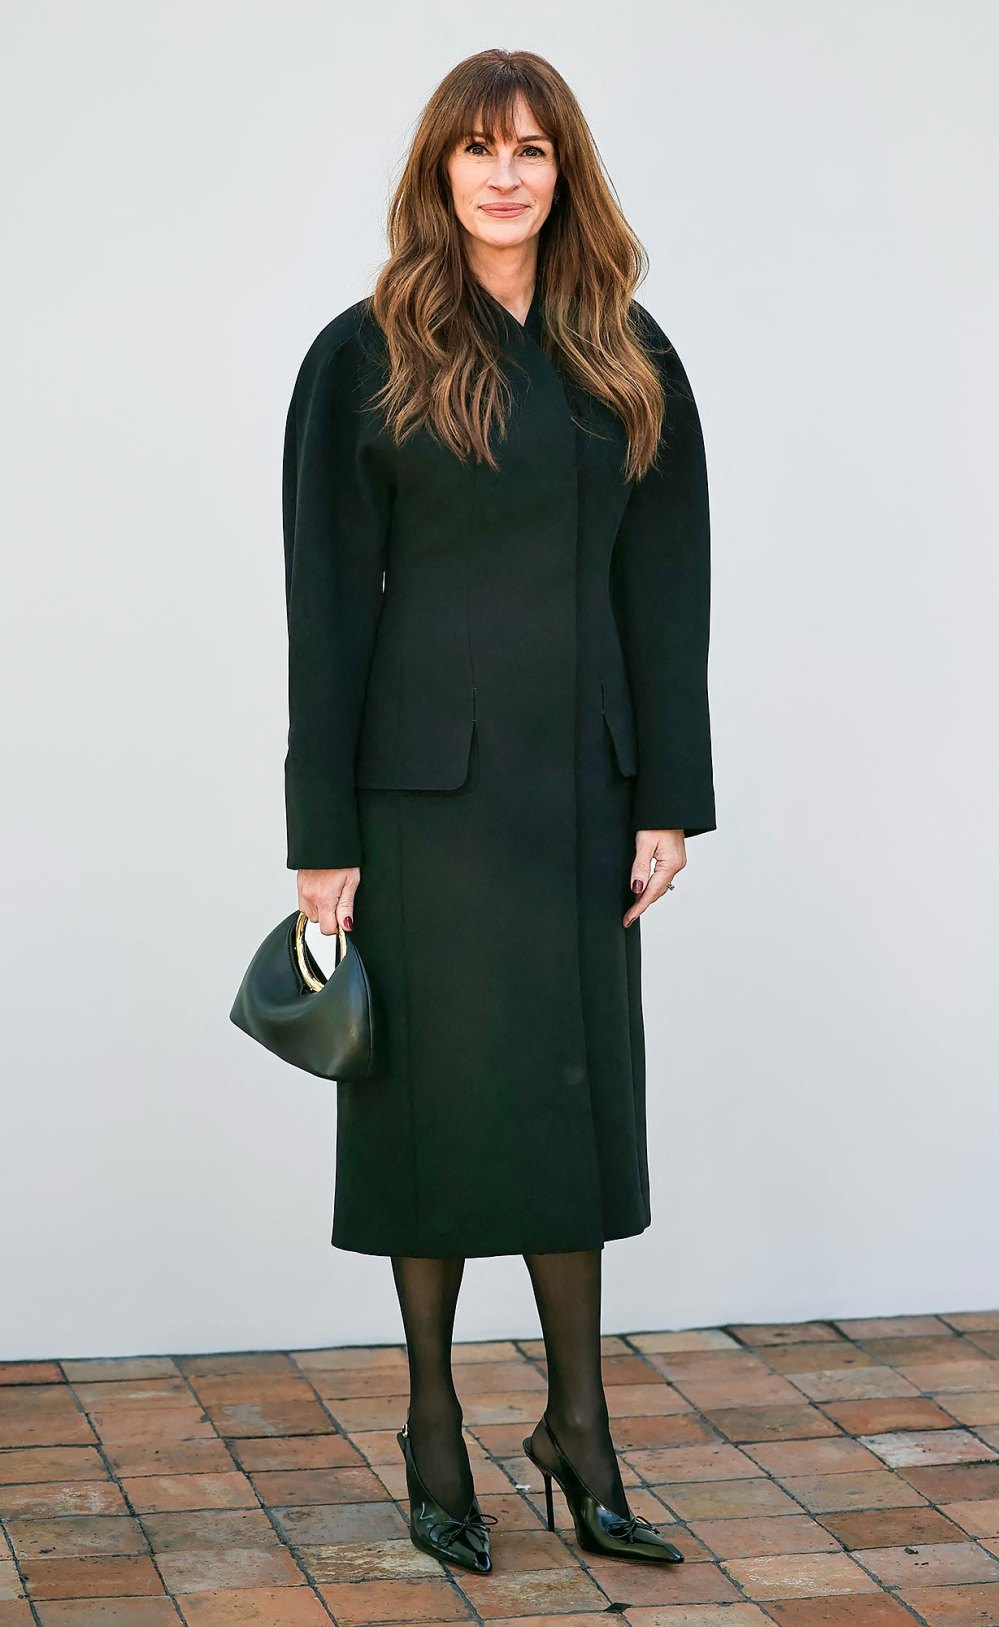 Julia Roberts Looks Sleek in Black Coat Dress at Jacquemus Fashion Show